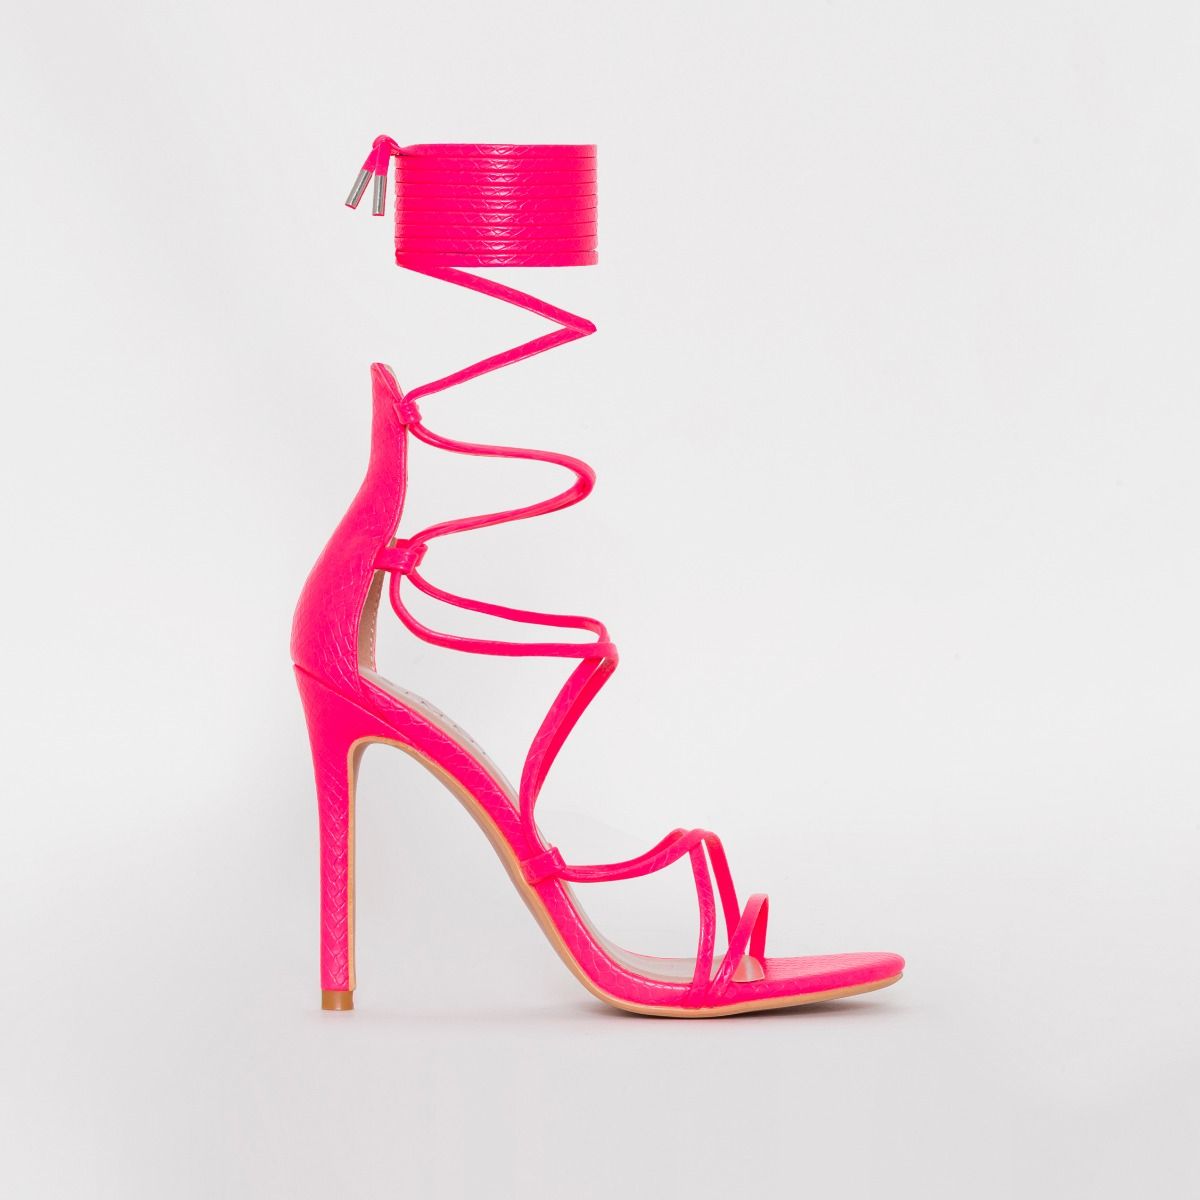 strappy pink heels